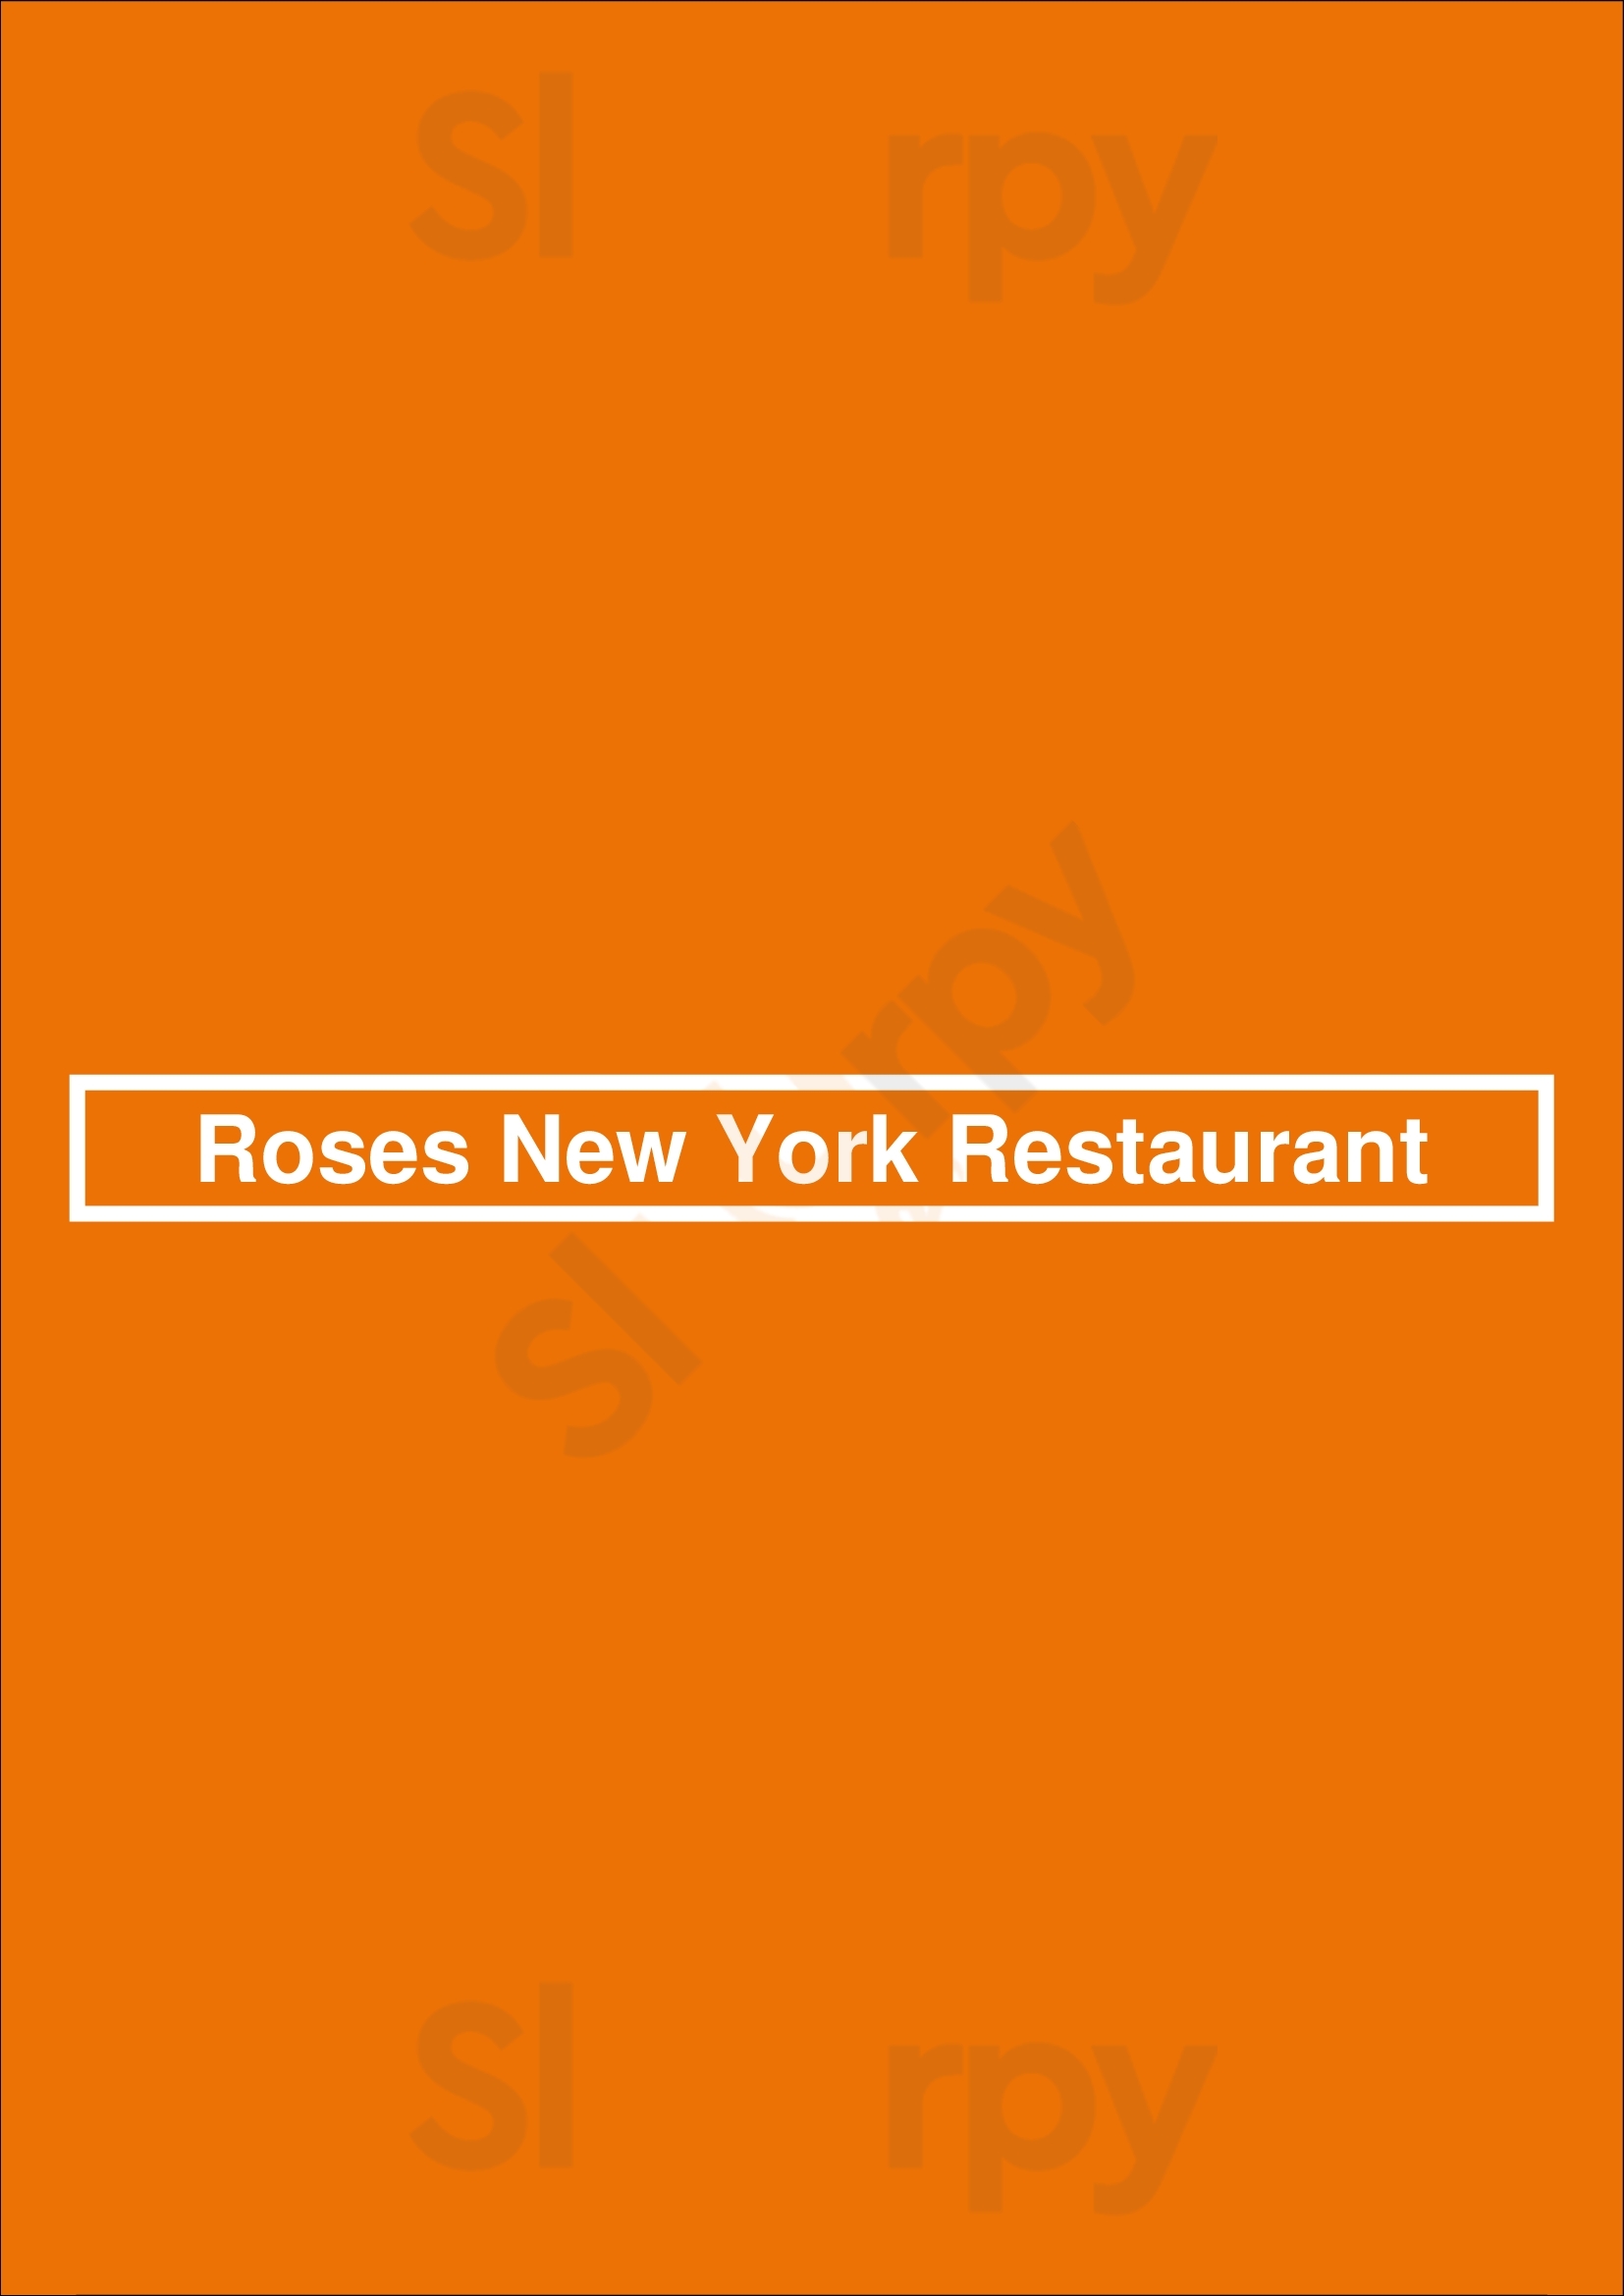 Roses New York Restaurant Toronto Menu - 1